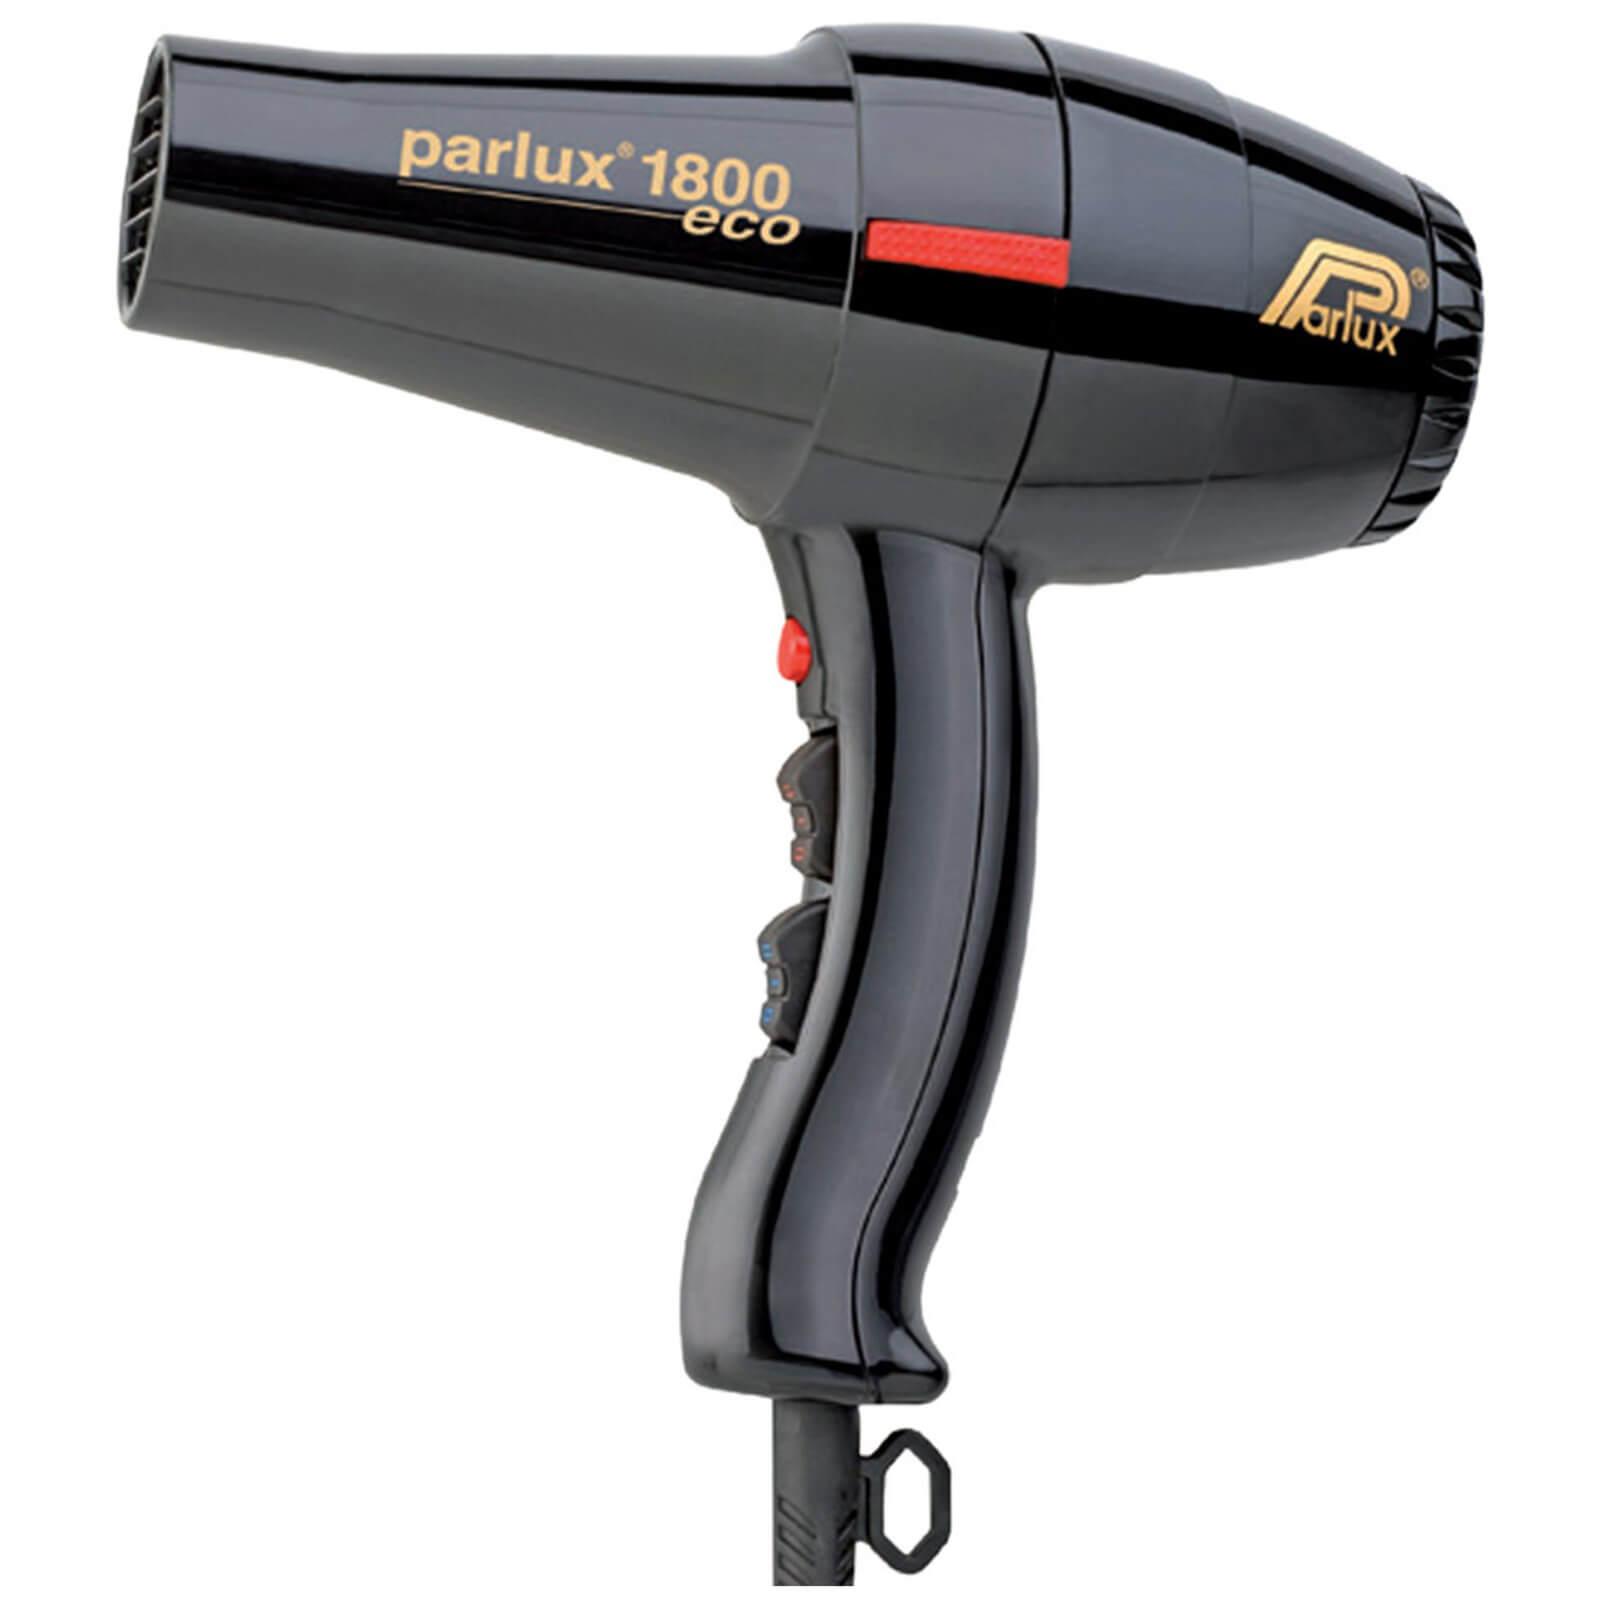 Parlux 1800 Eco Friendly Hair Hair Dryer 1280W (Various Shades) - Black